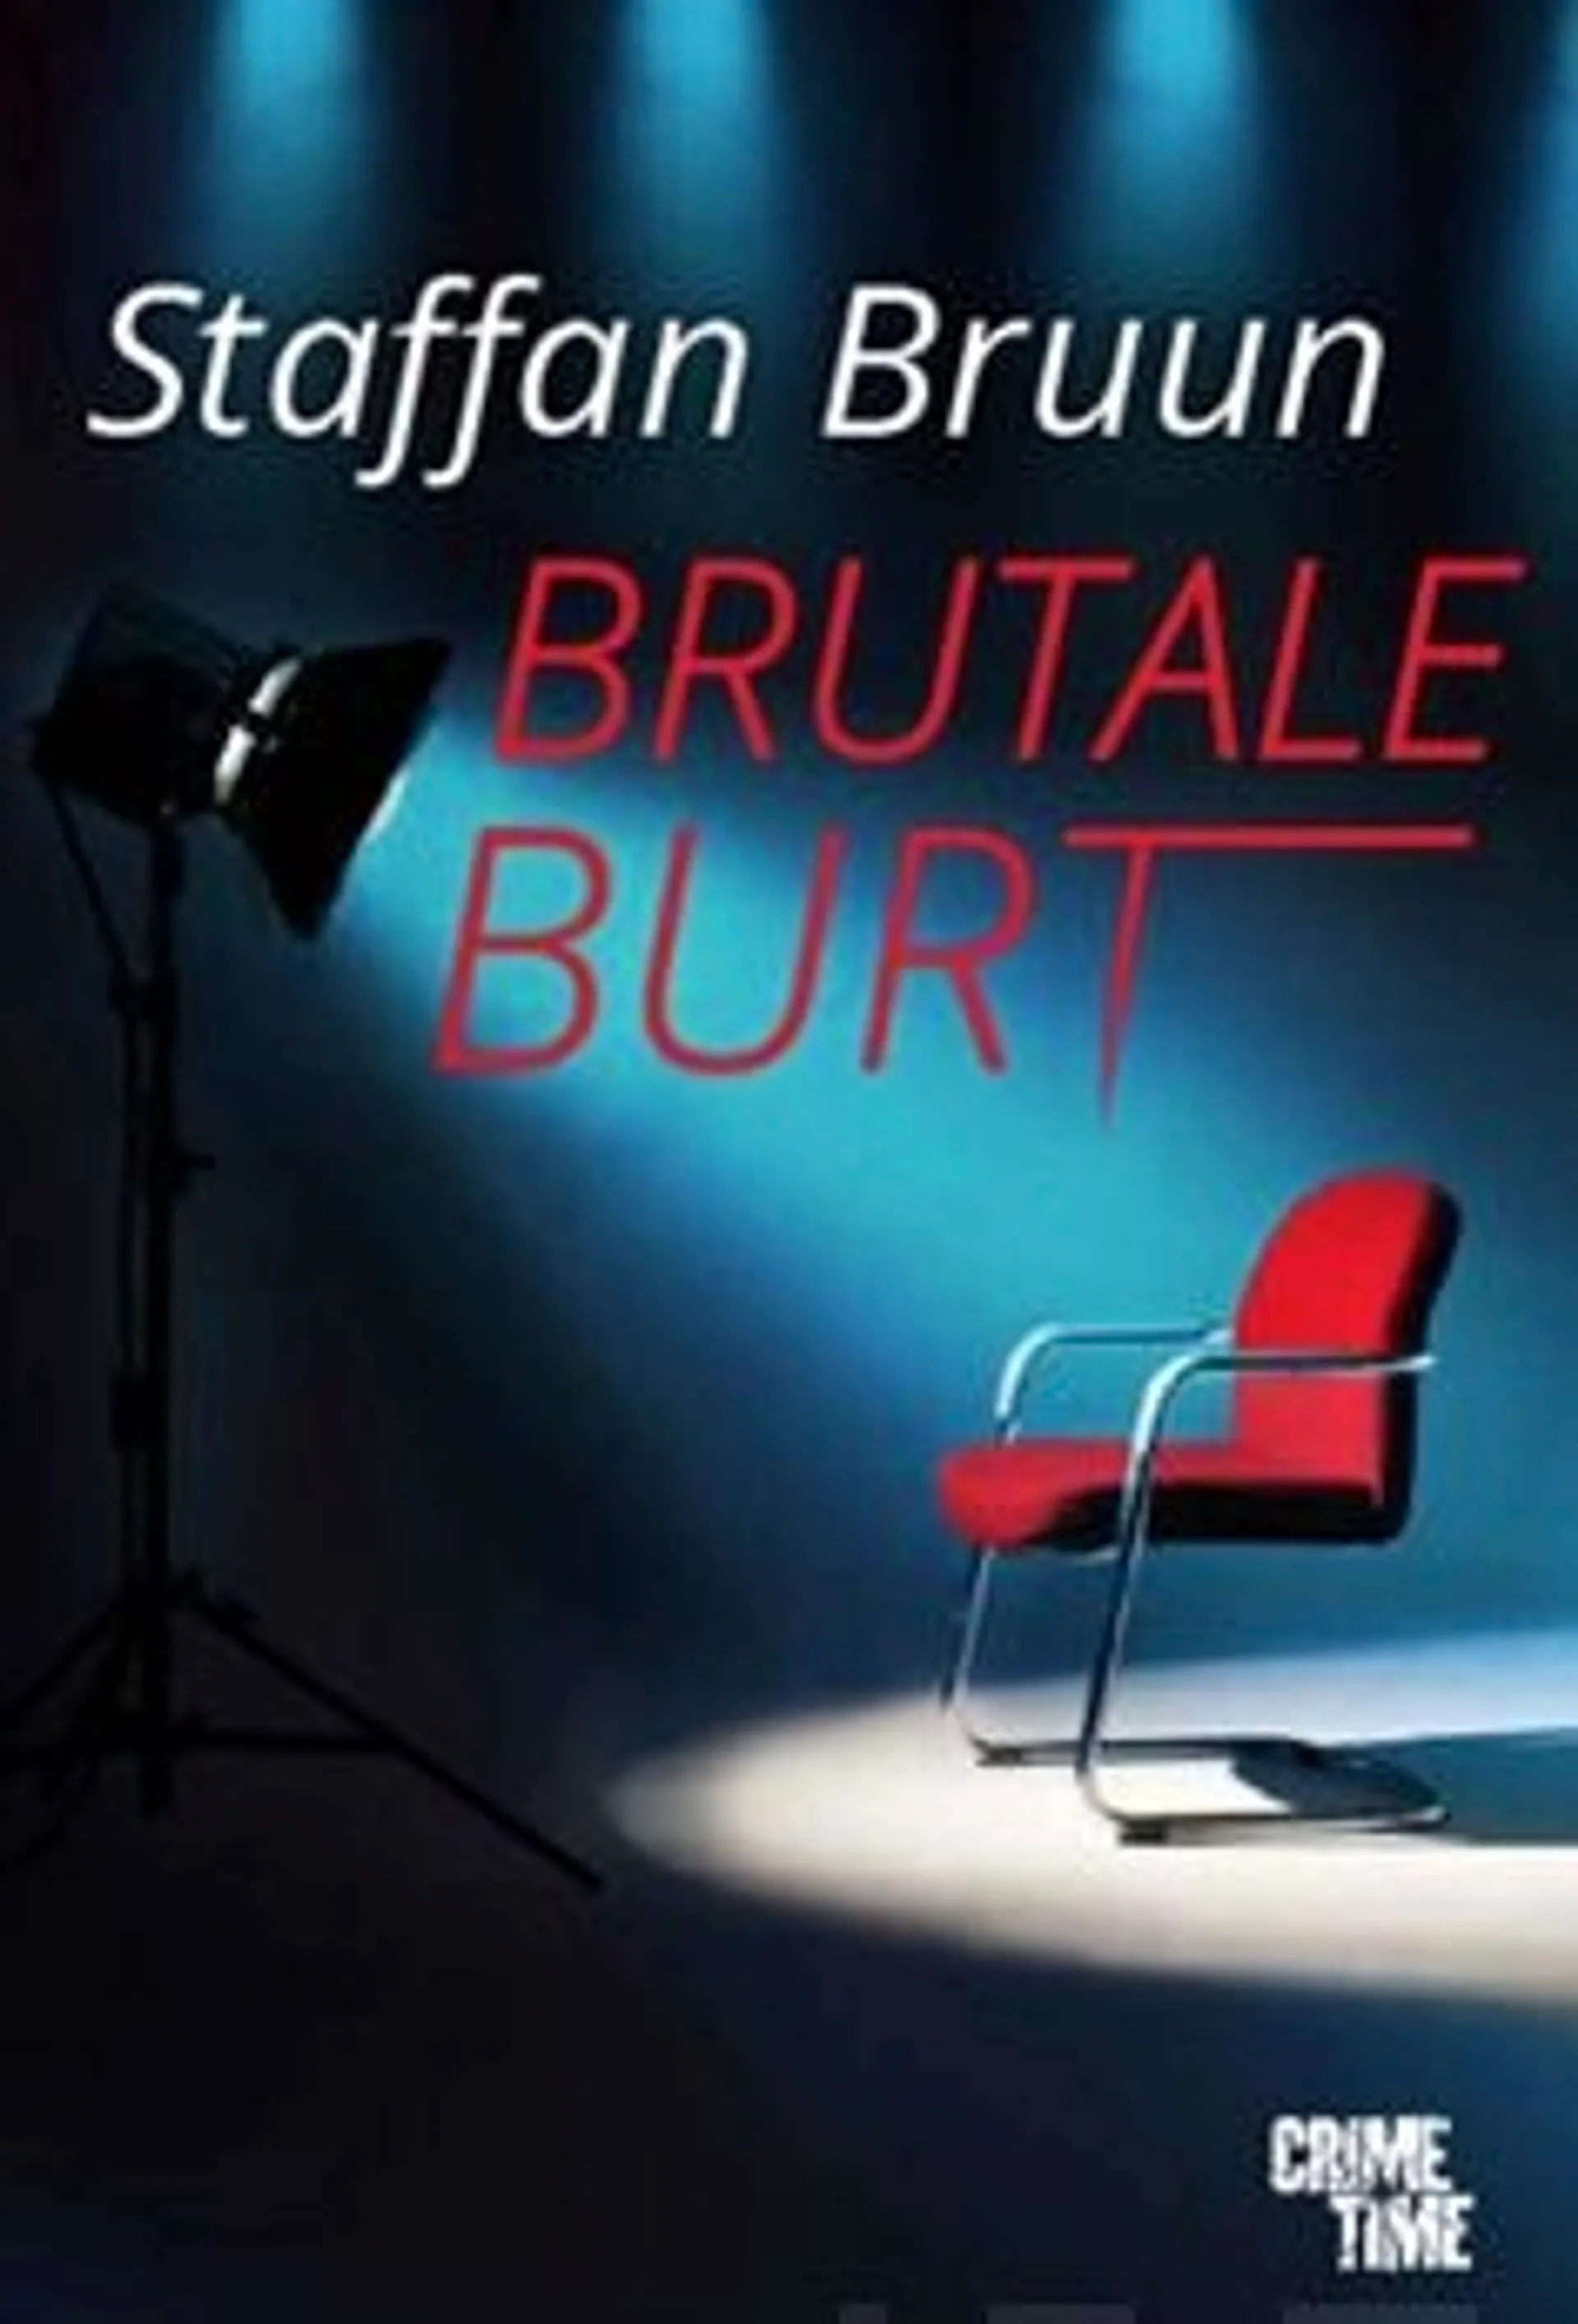 Bruun, Brutale Burt